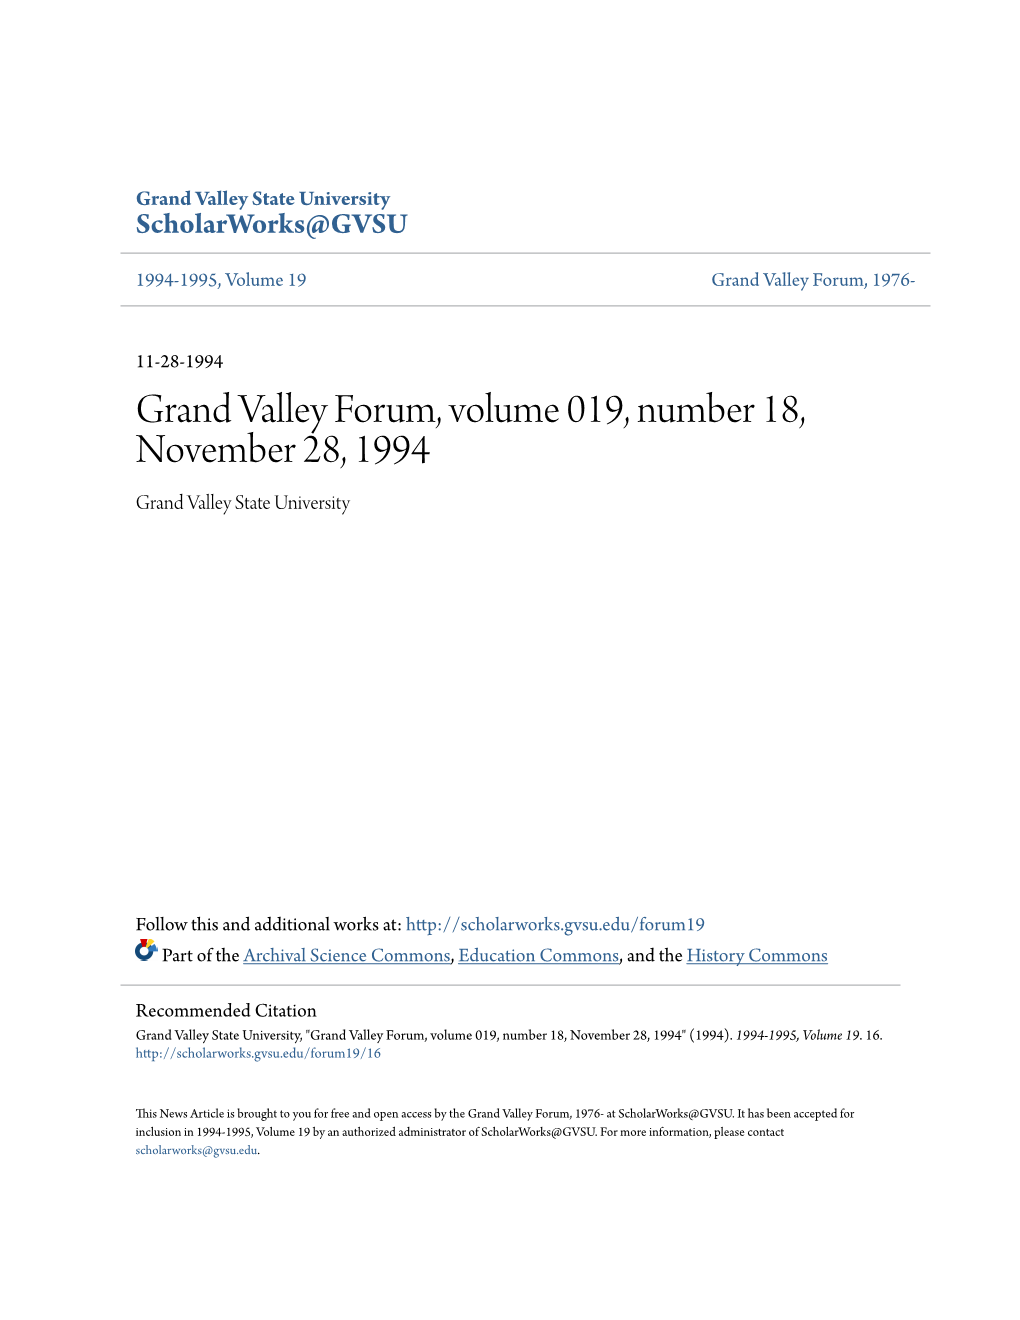 Grand Valley Forum, Volume 019, Number 18, November 28, 1994 Grand Valley State University